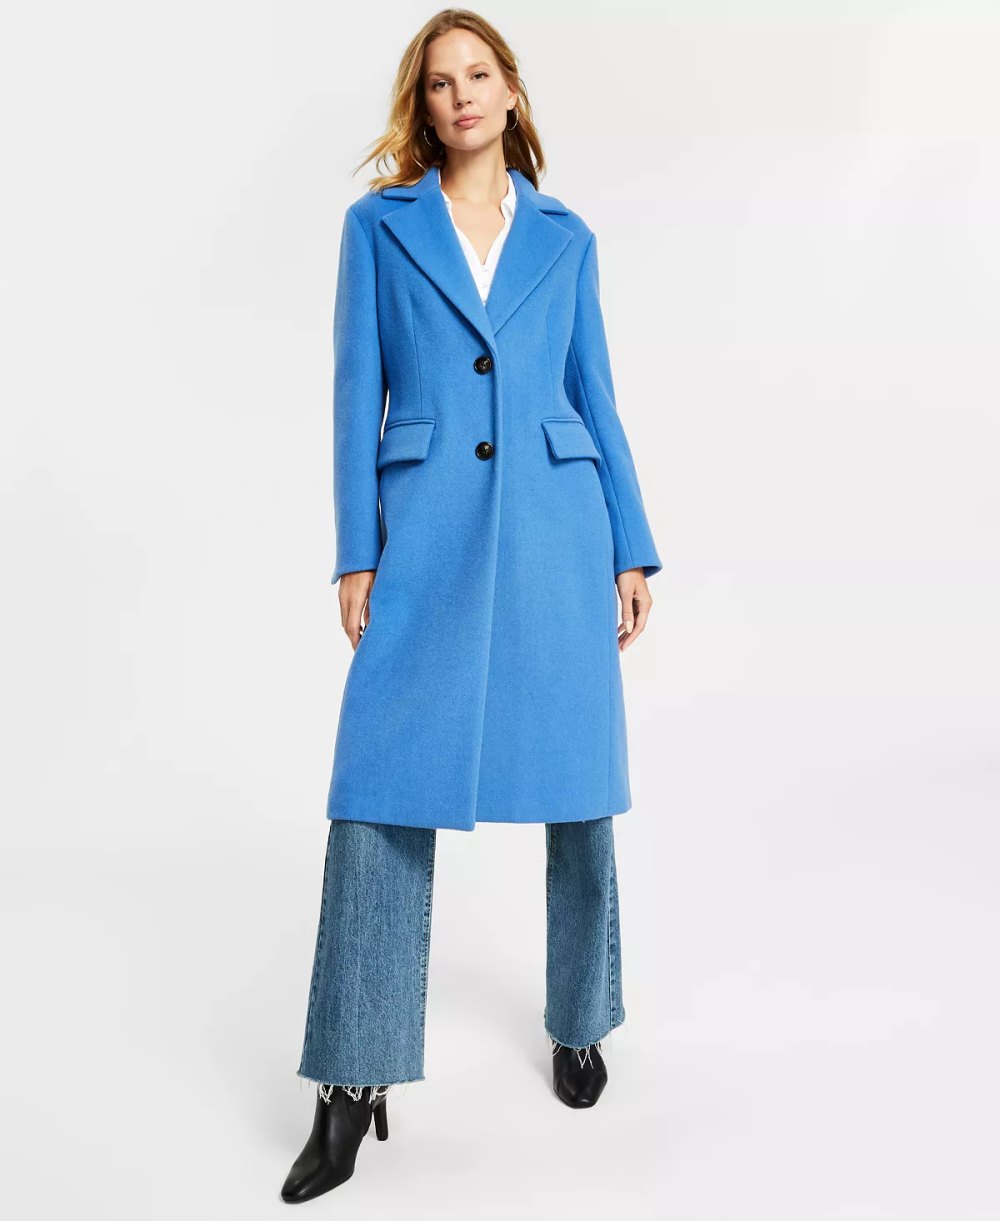 MICHAEL MICHAEL KORS Women's Single-Breasted Wool Blend Coat, Created for Macy's